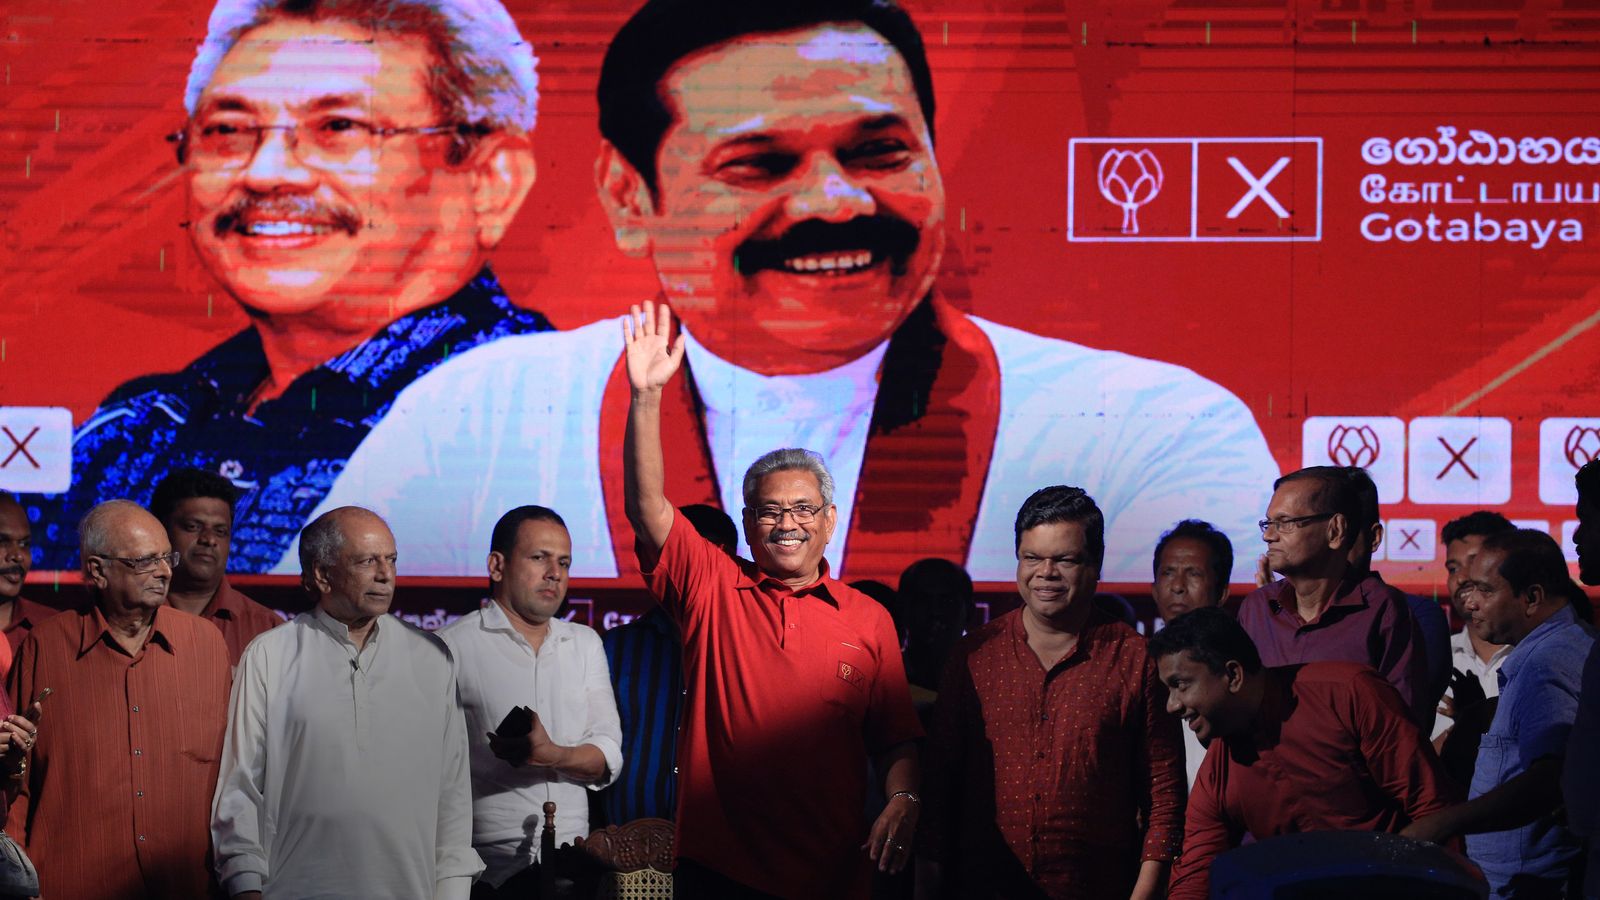 Civil war defense chief wins Sri Lanka presidential election